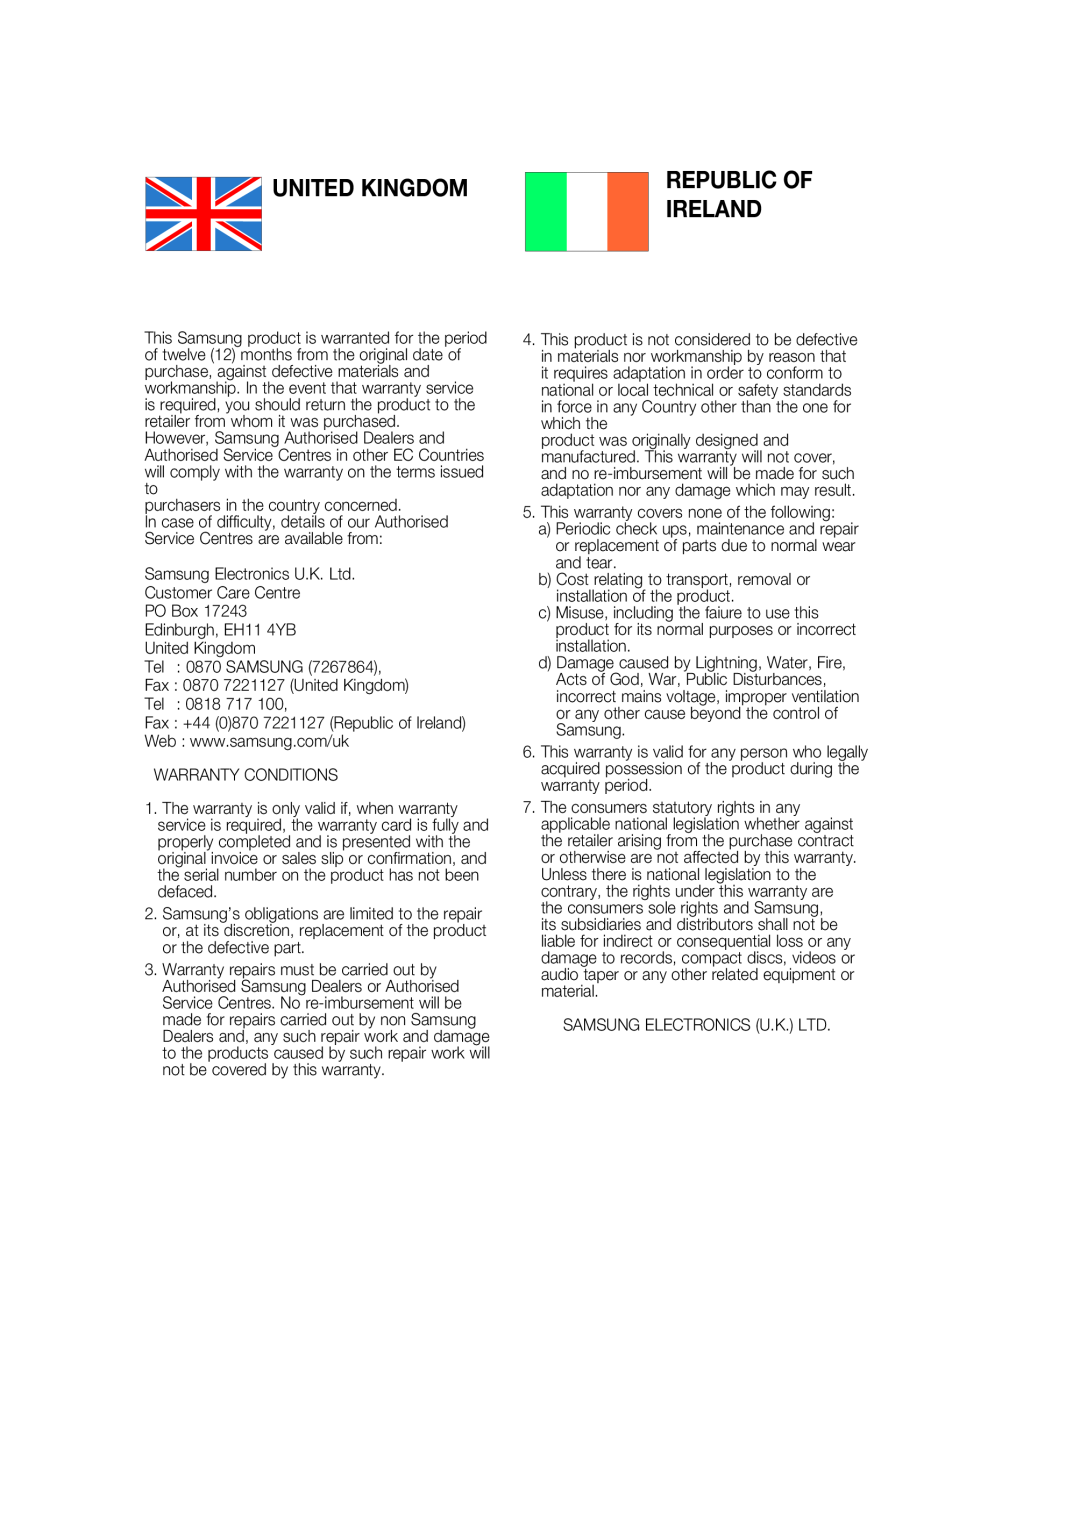 Samsung HE10T user manual United Kingdom, Ireland, Republic Of 